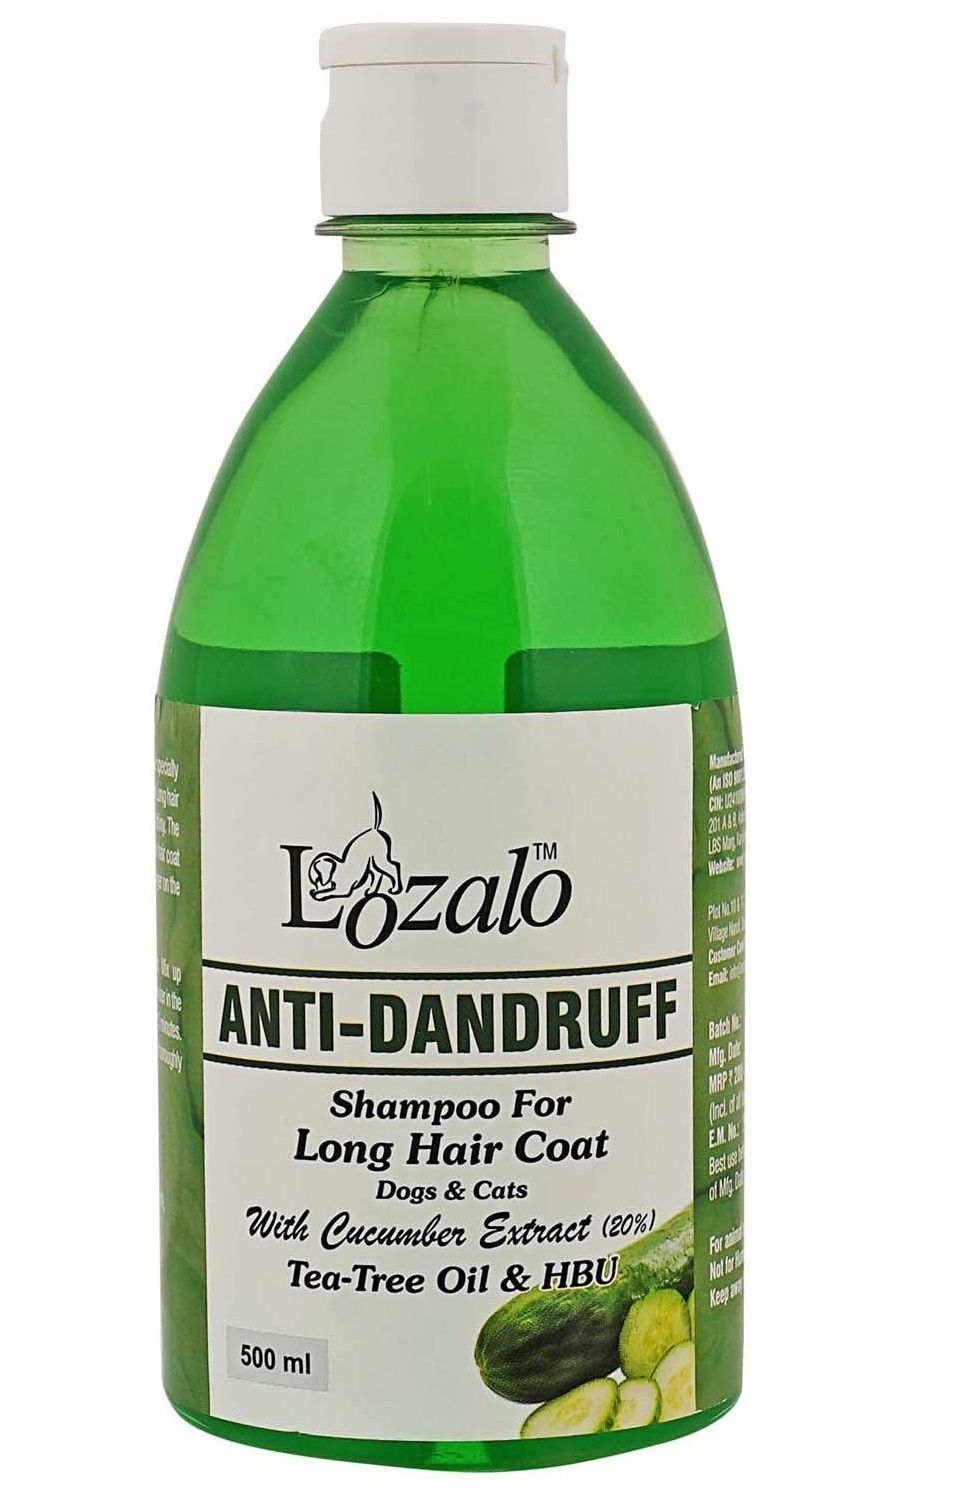 Lozalo Anti Dandruff With Cucumber Extract Long Hair Coat Shampoo For Dogs & Cats